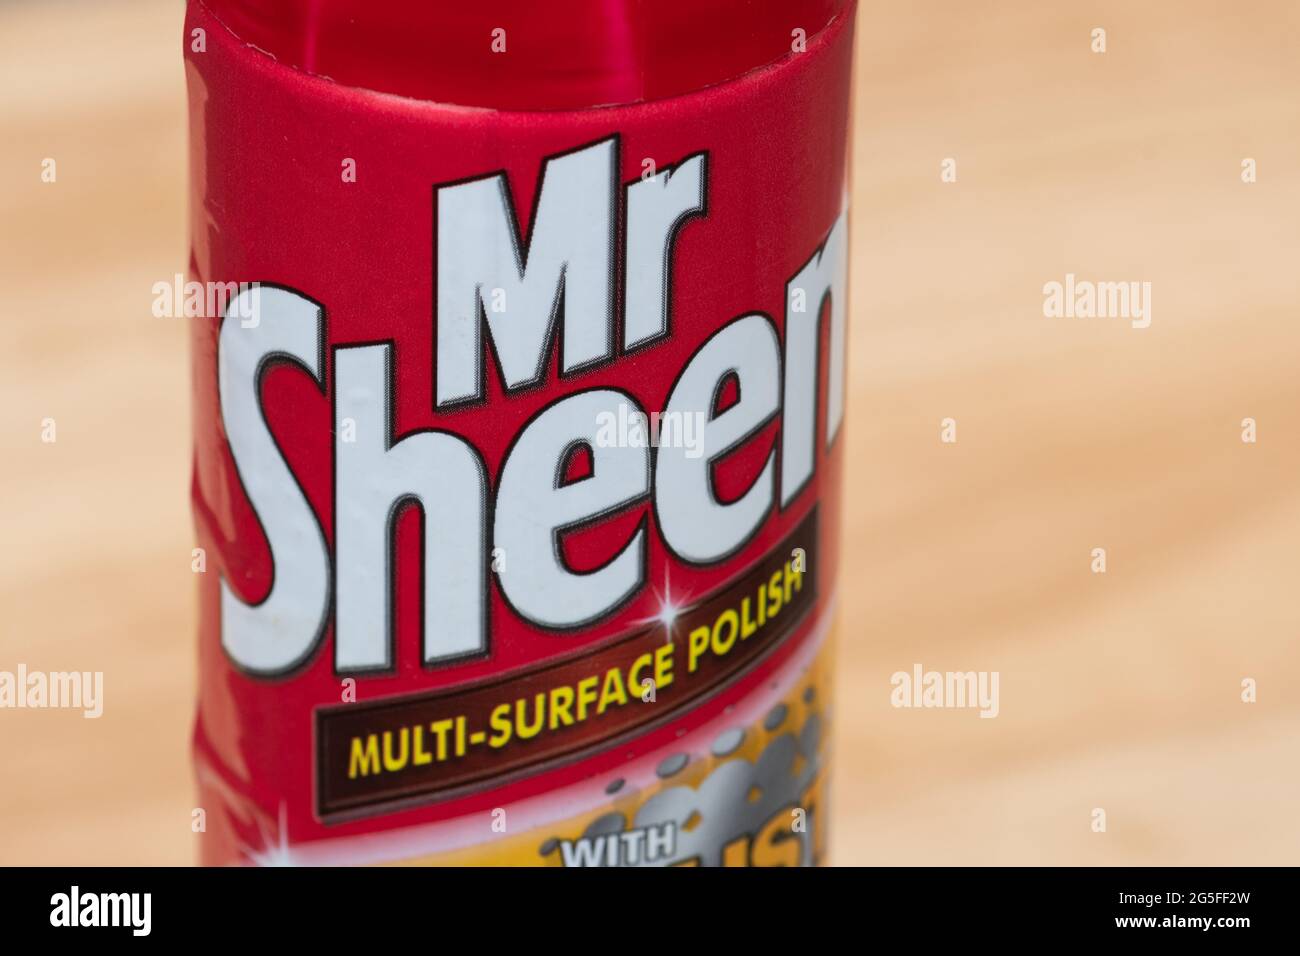 Mr Sheen multi-surface polish, cleaning polishing product Stock Photo